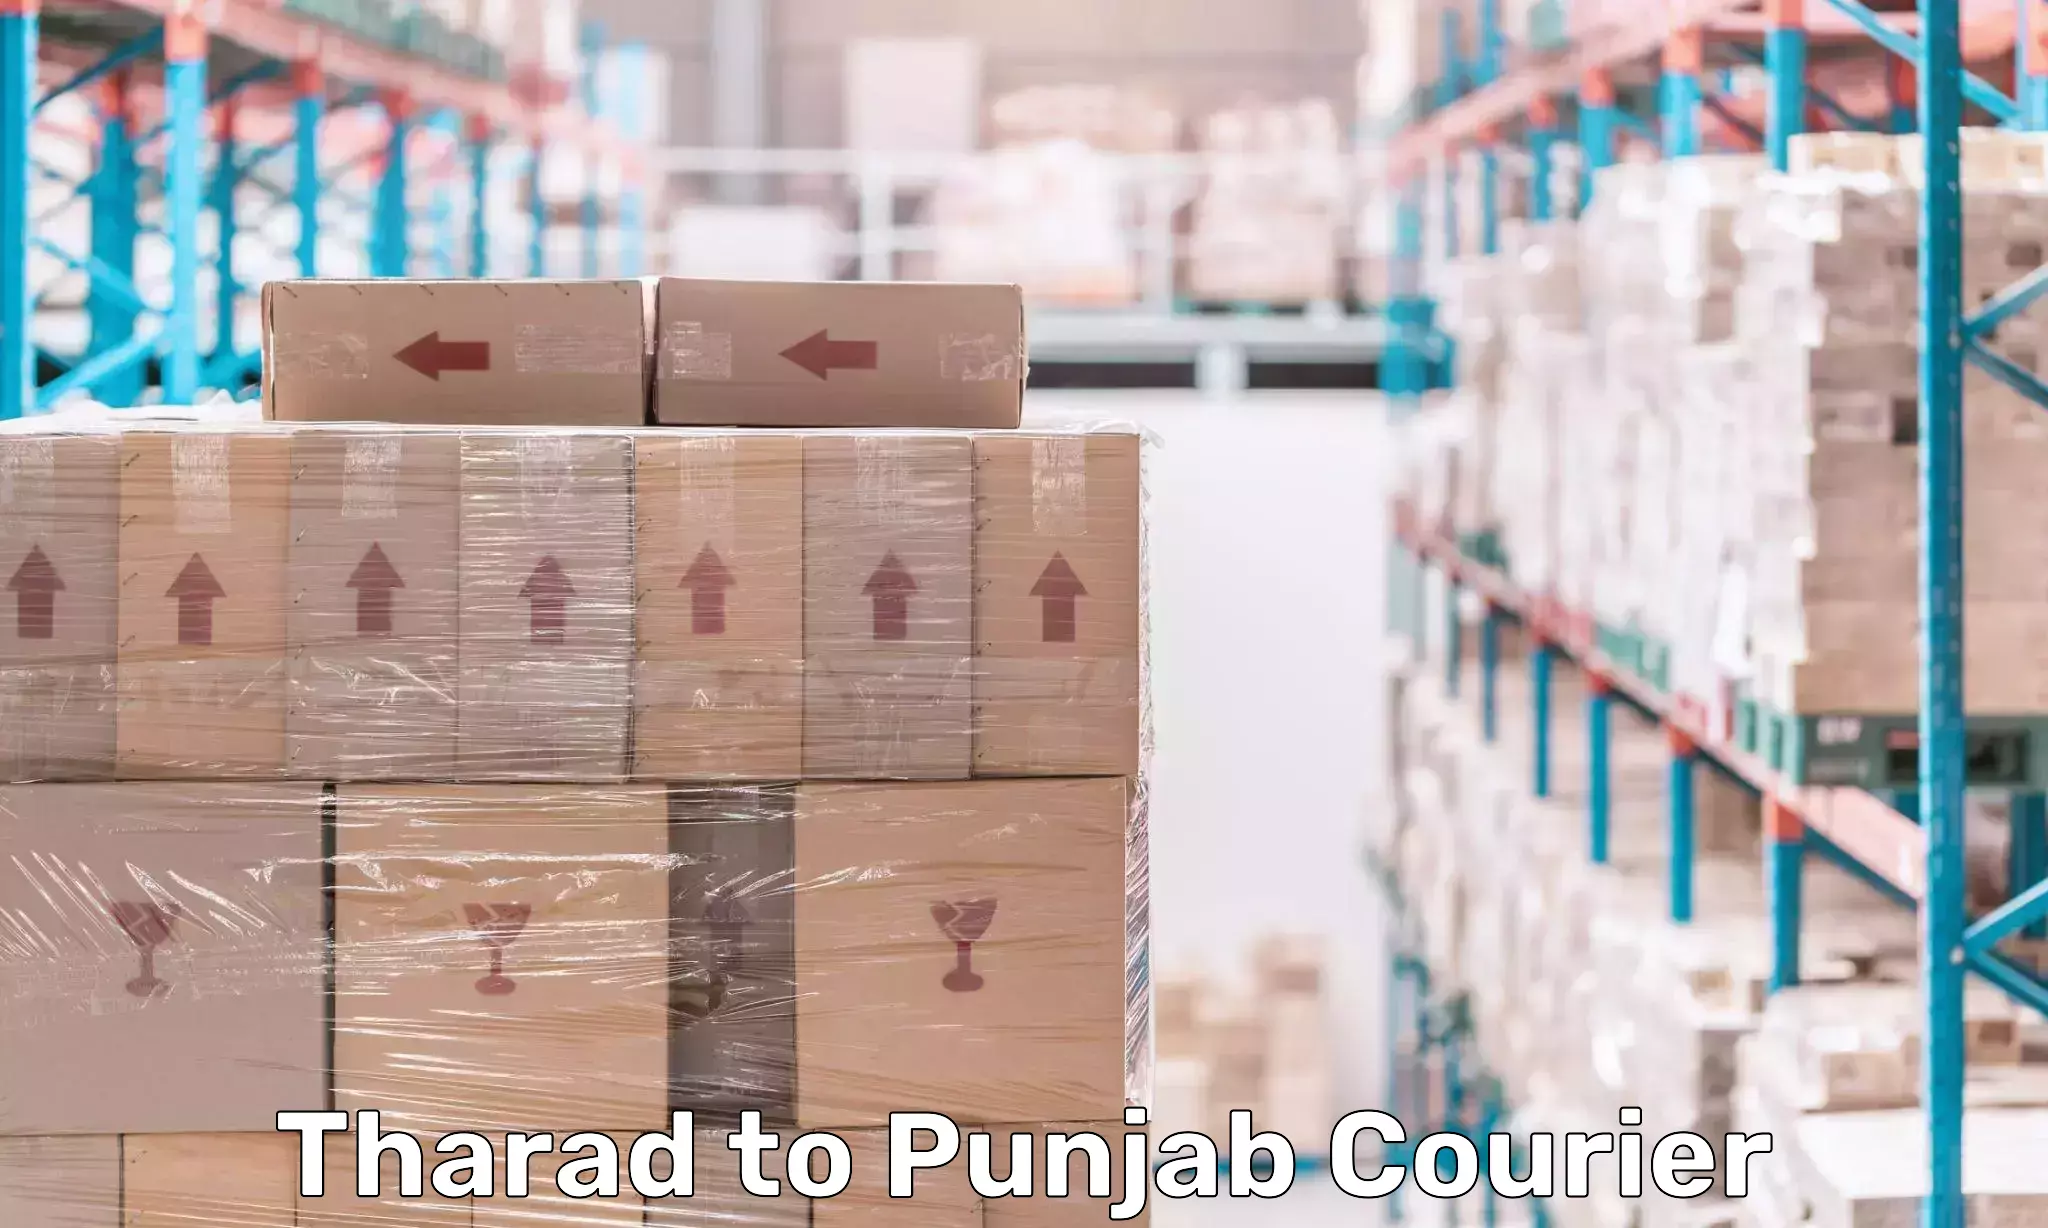 Global logistics network Tharad to Punjab